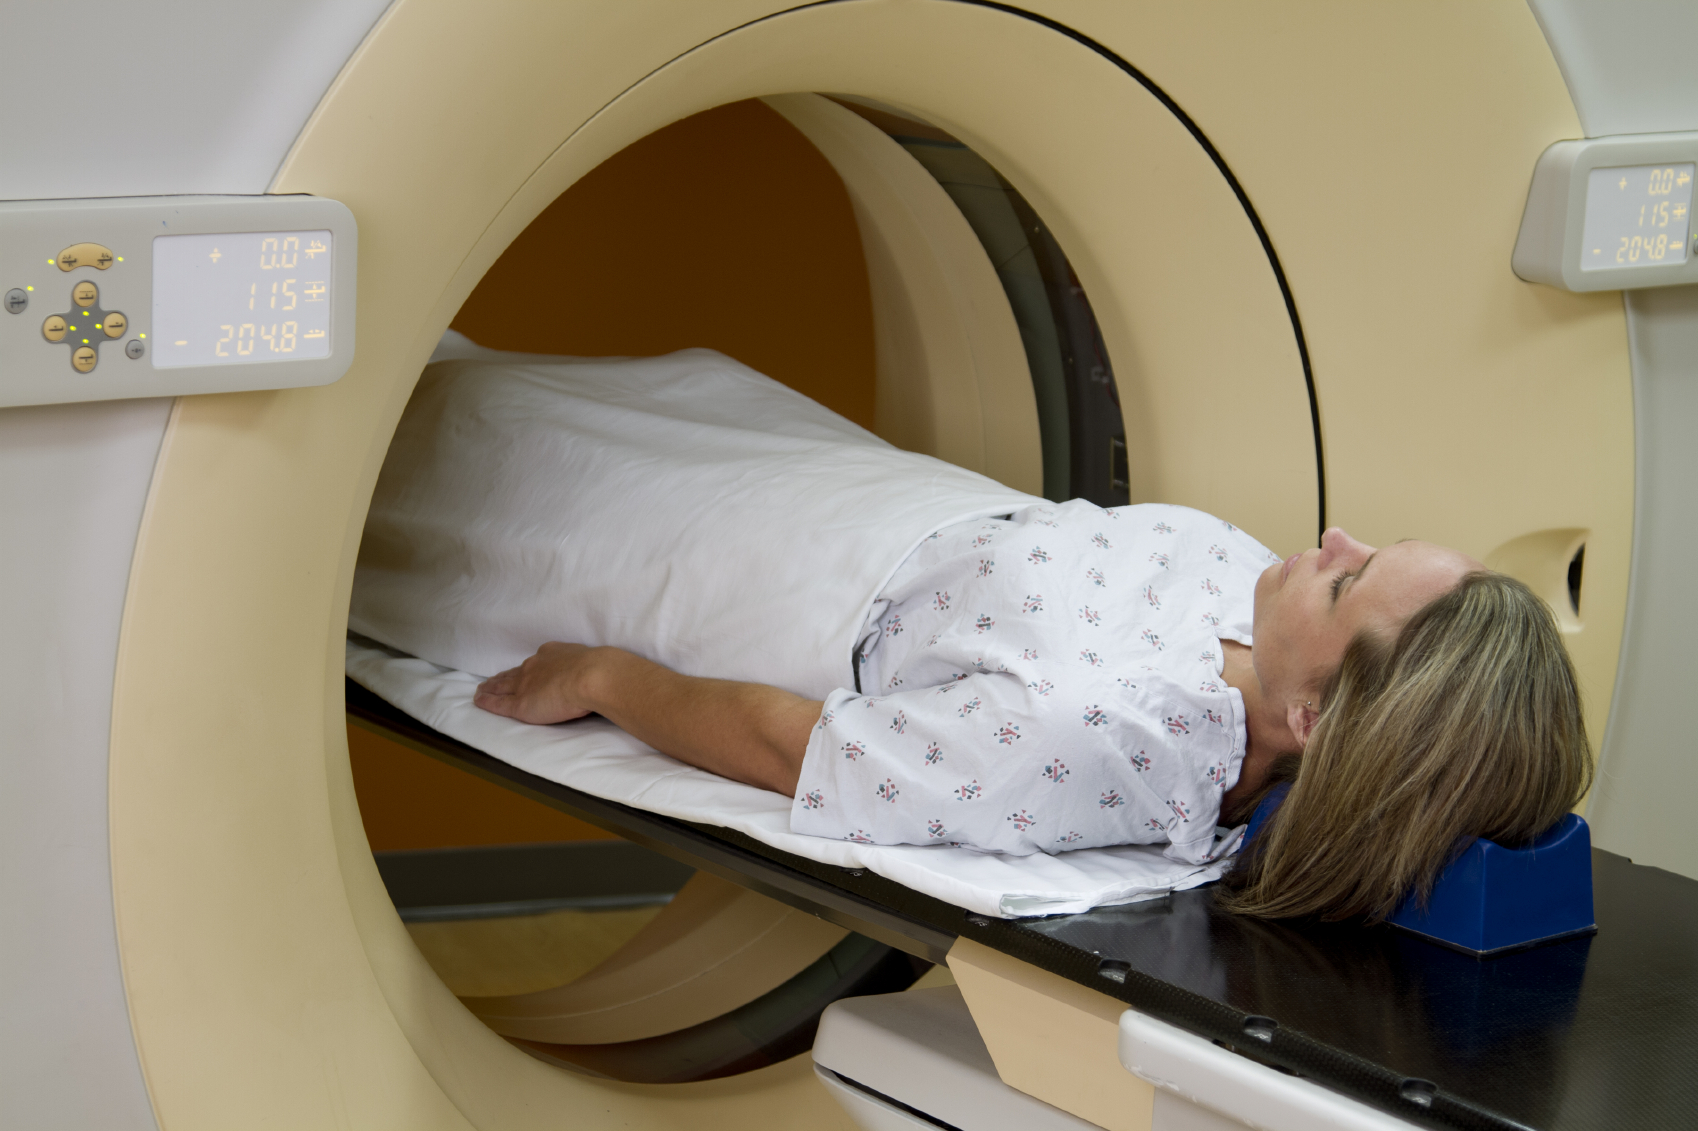 Do you need MRI? CBS News